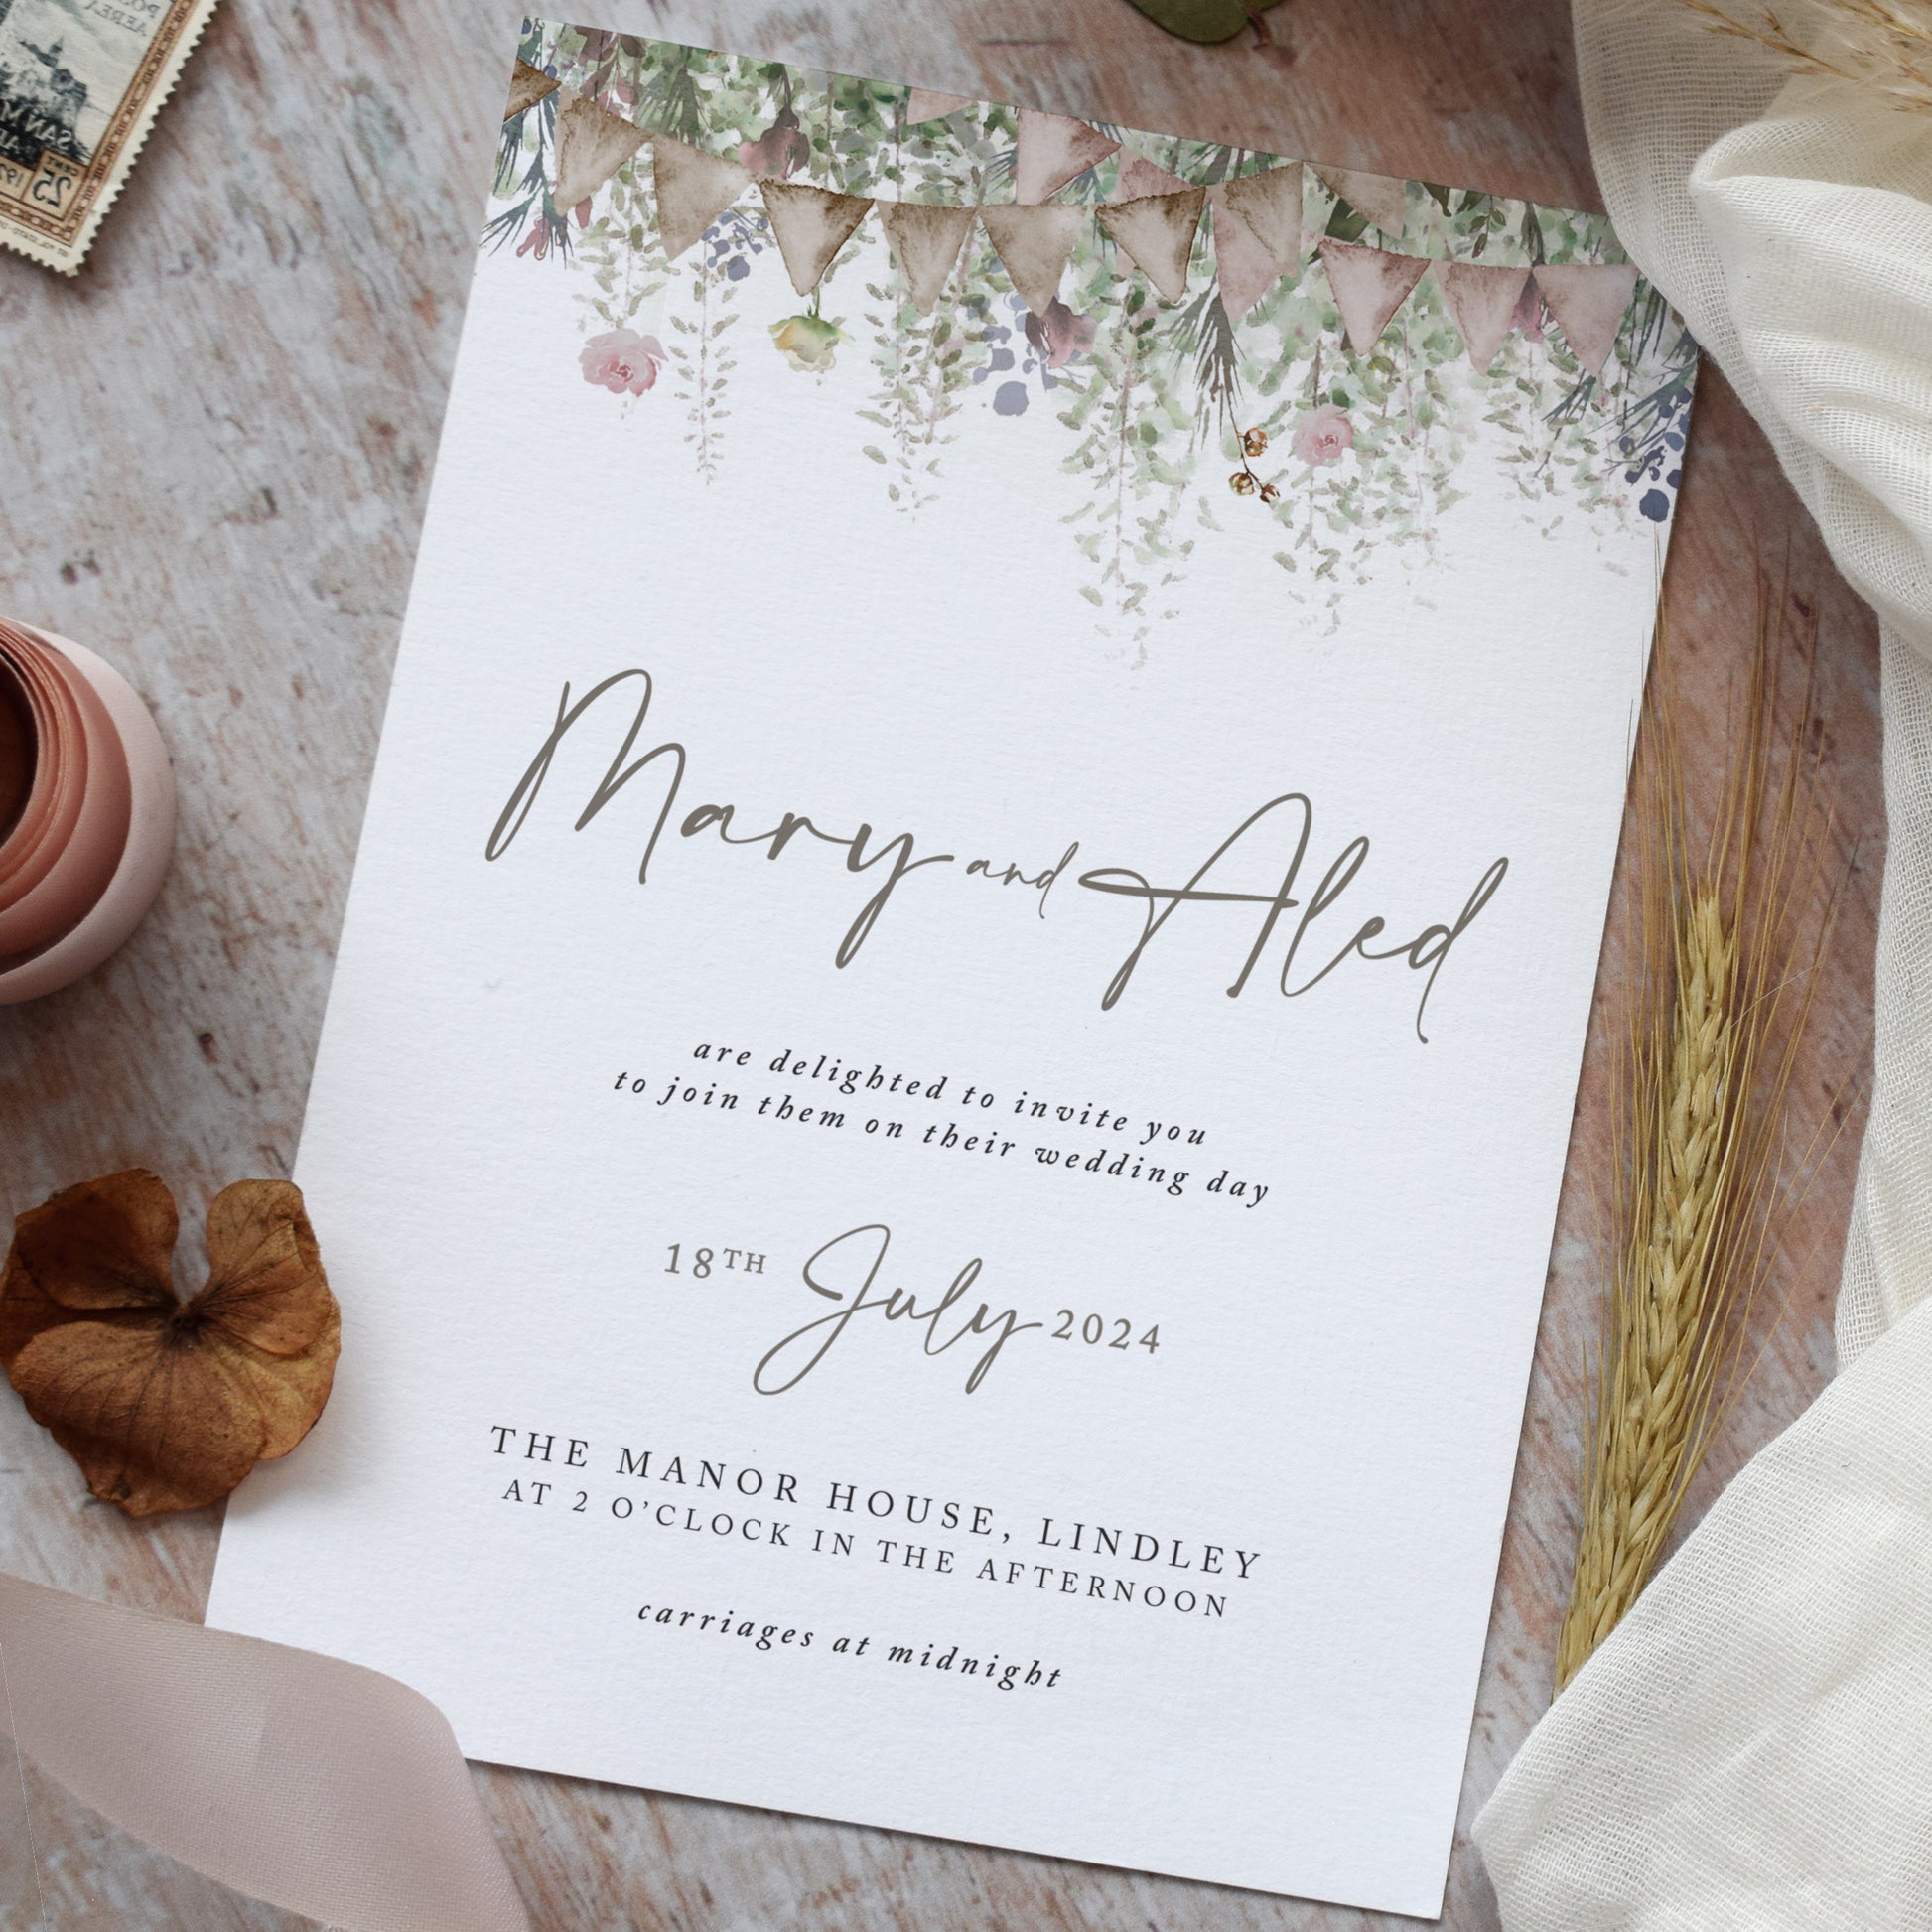 Rustic wedding invitations perfect for a barn wedding